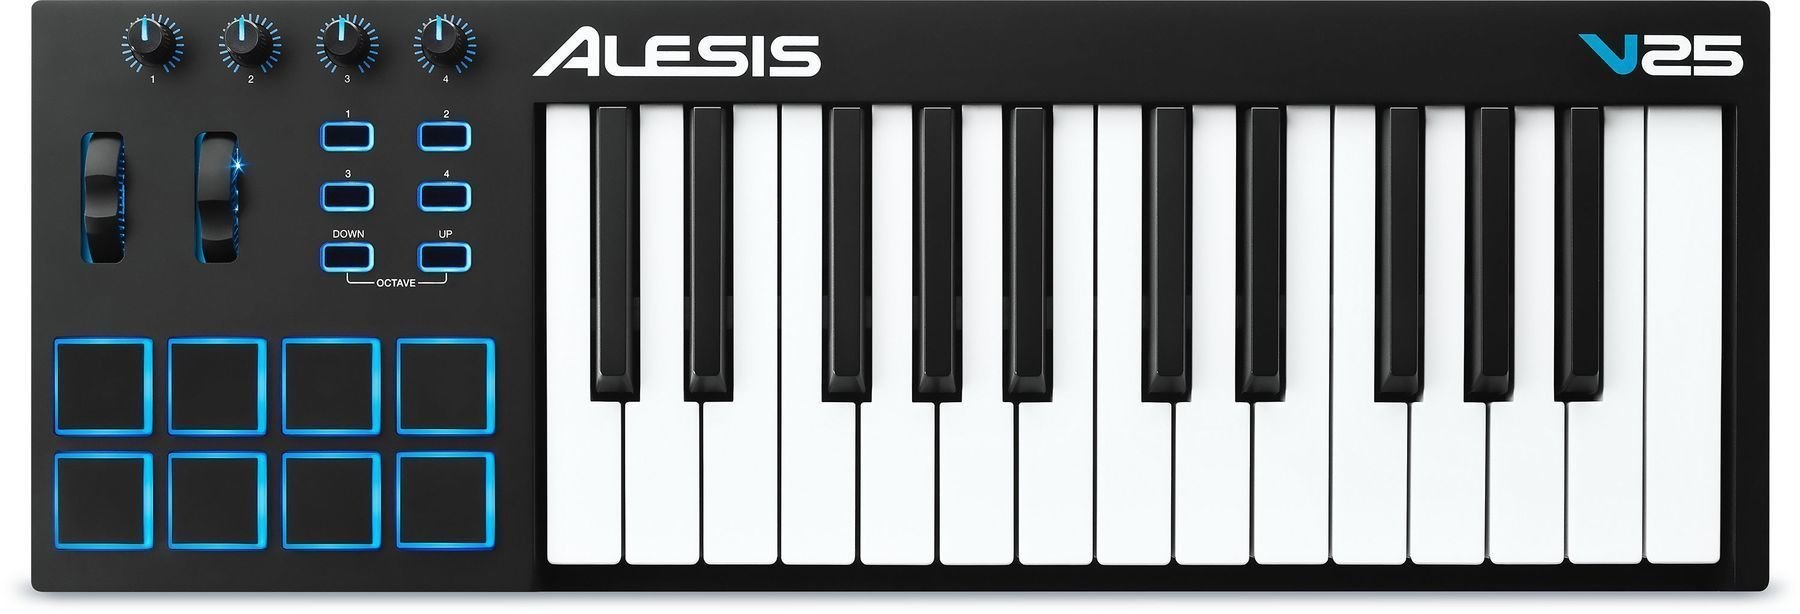 Master Keyboard Alesis V25